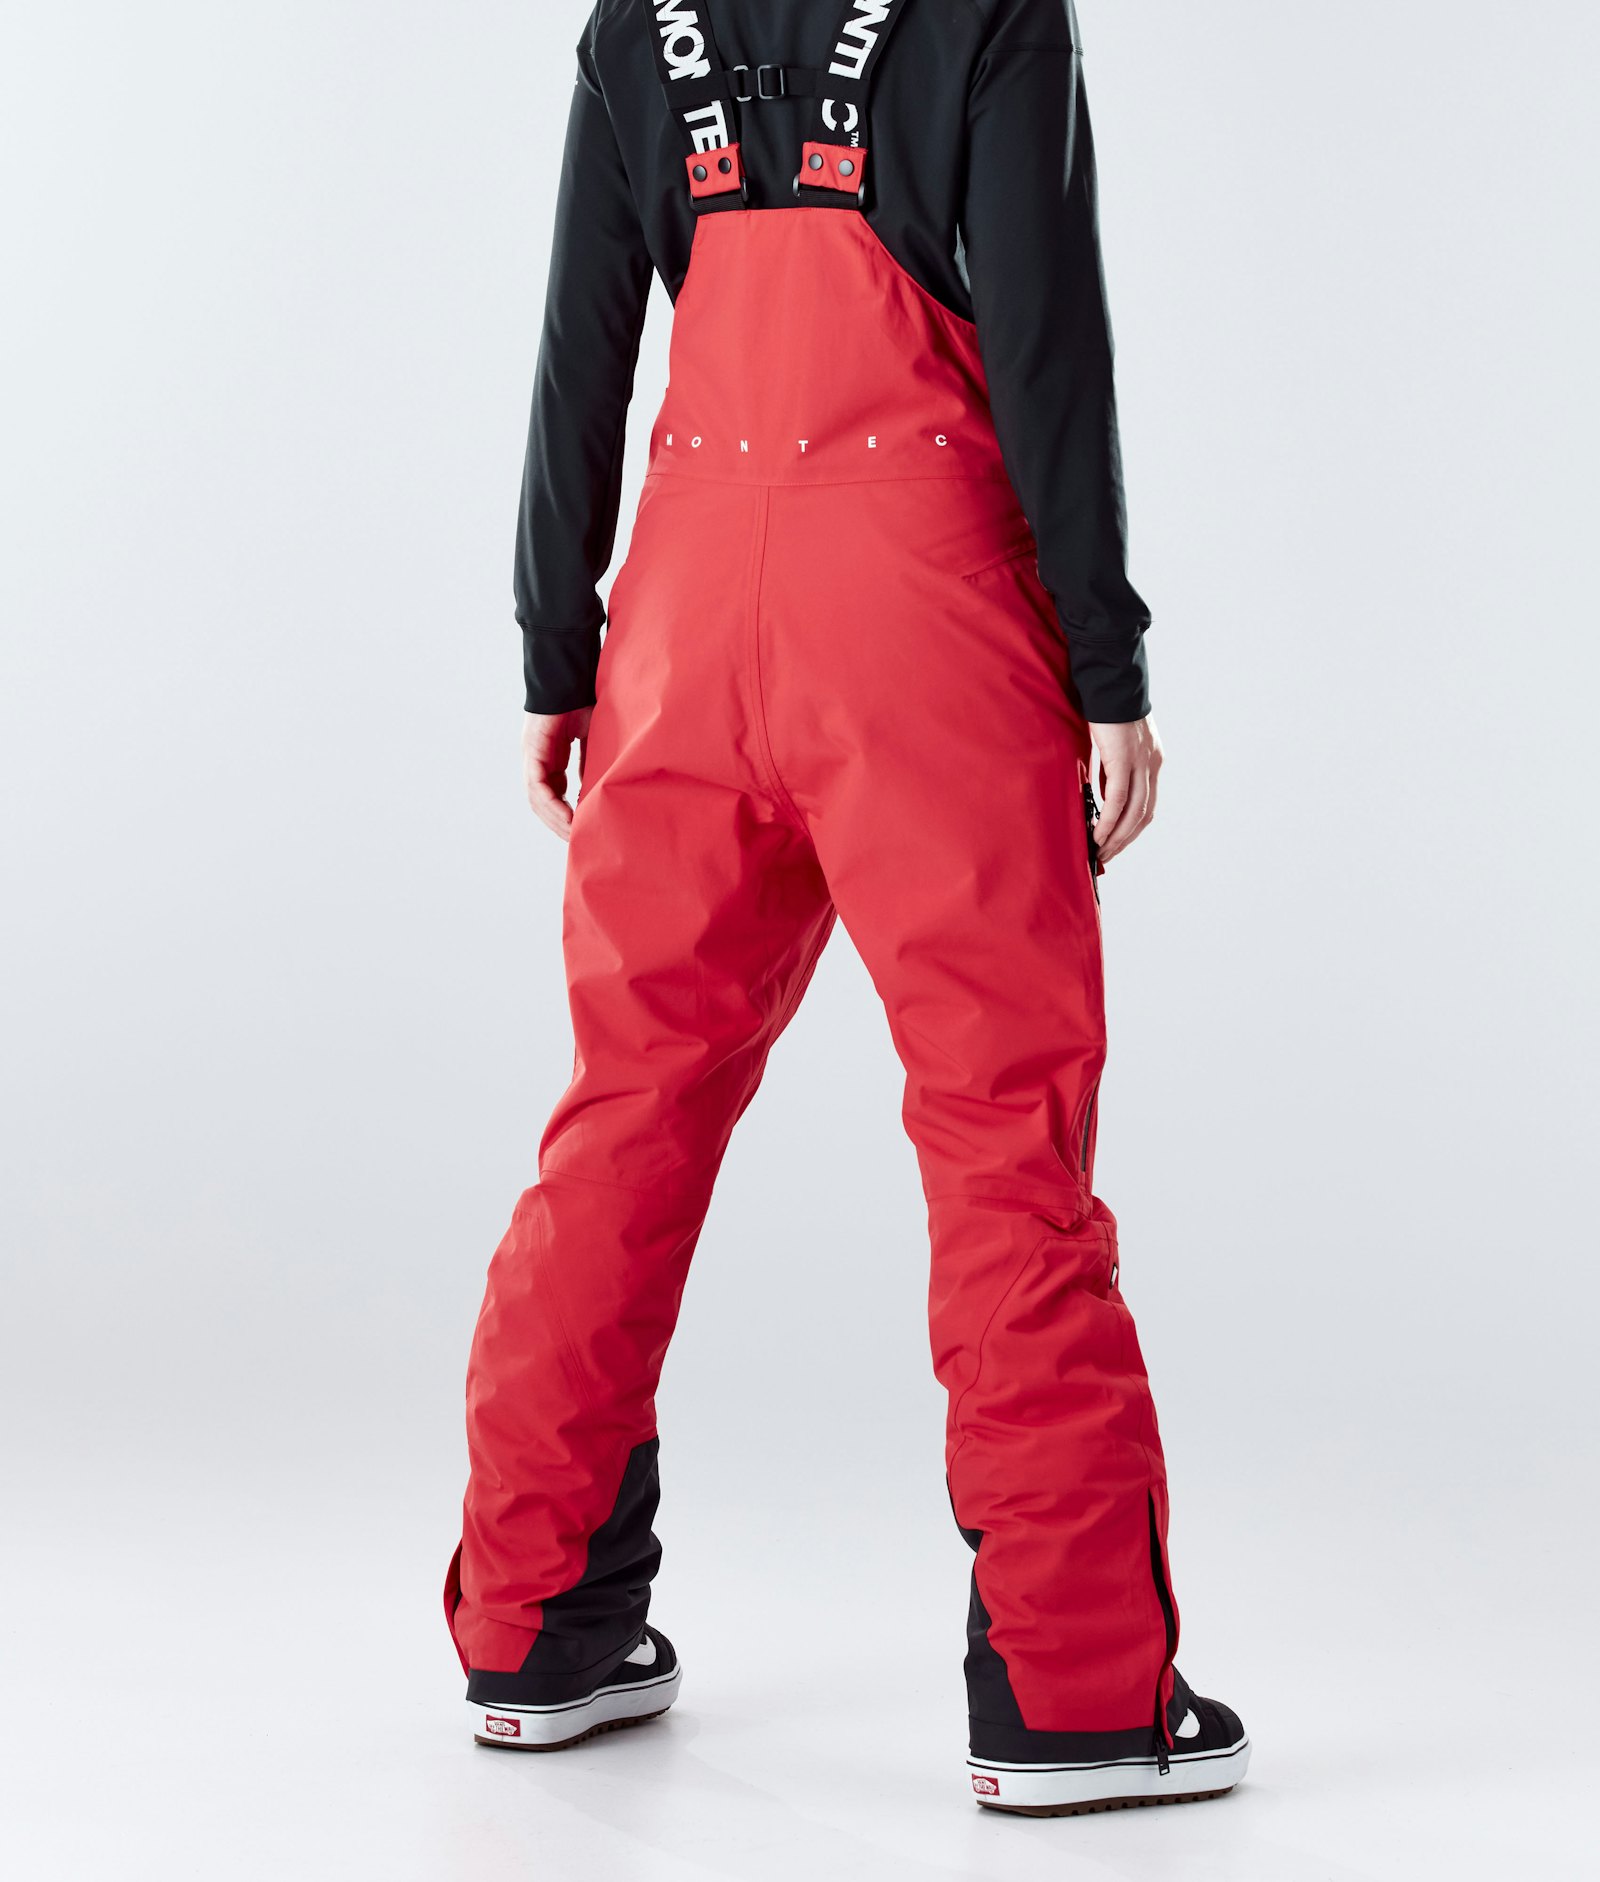 Montec Fawk W 2020 Pantalones Snowboard Mujer Red